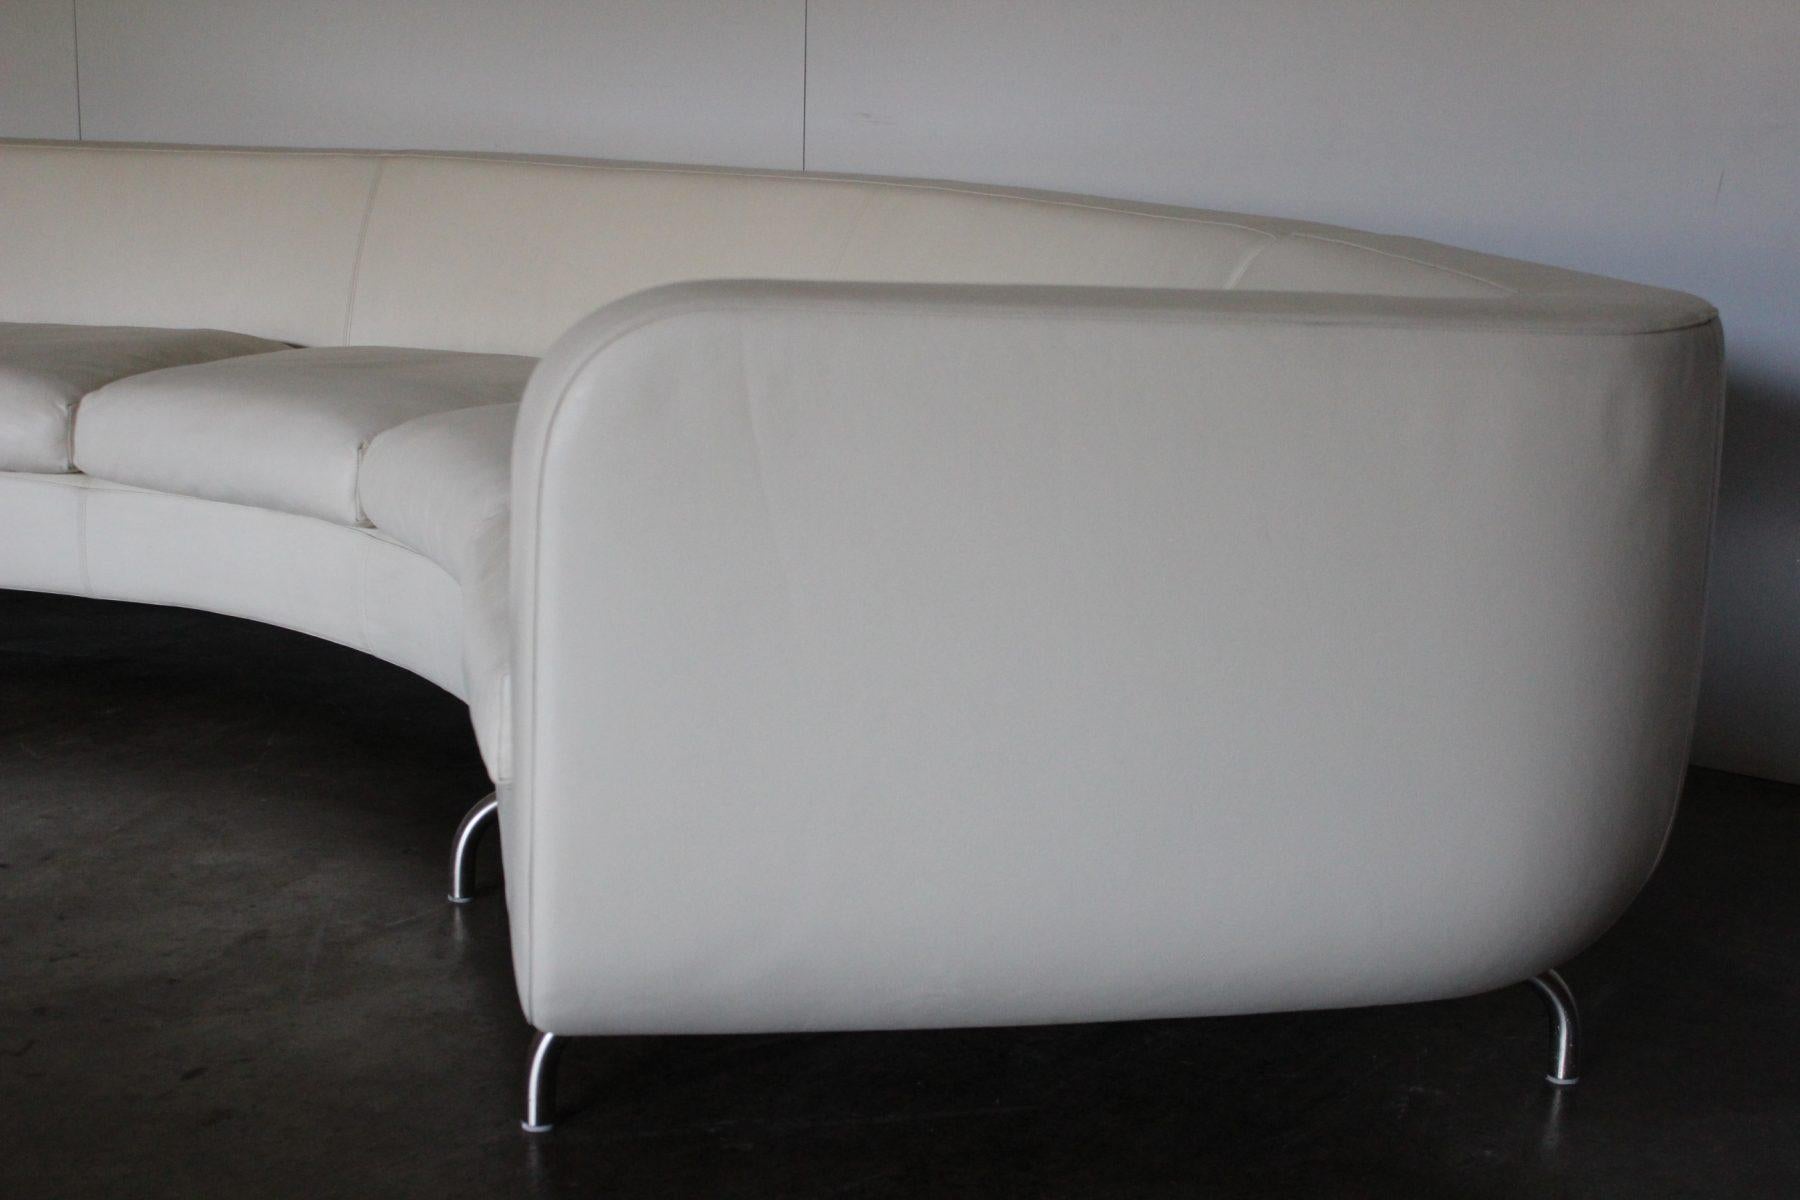 Rare Minotti “Dubuffet” Curved Sofa, in Cream “Pelle” Leather 2